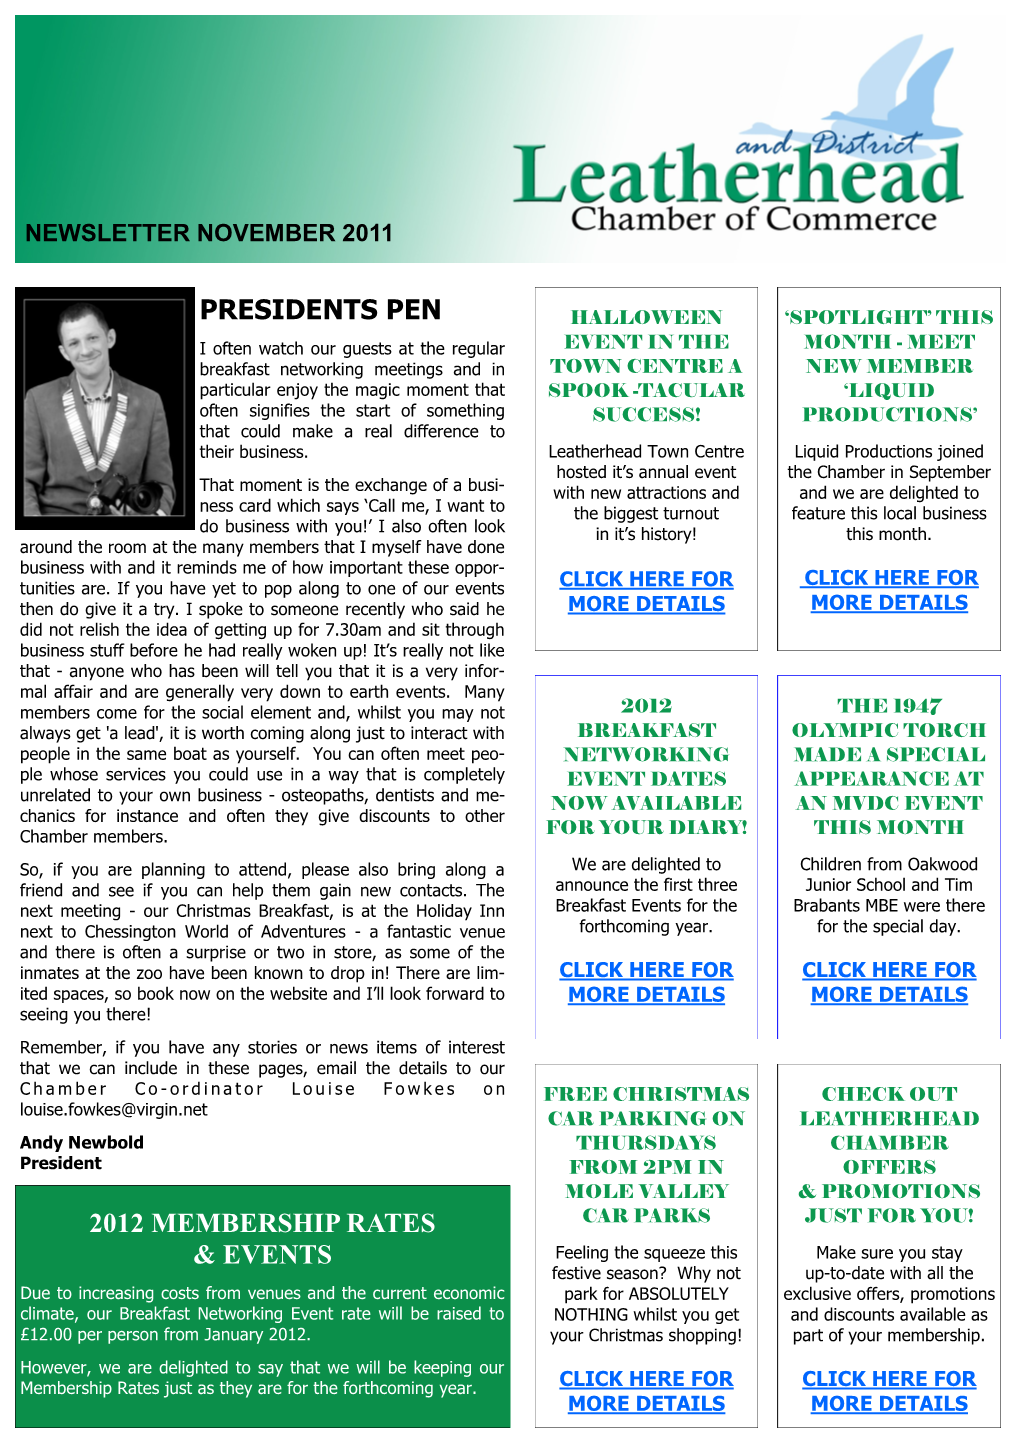 Presidents Pen 2012 Membership Rates & Events